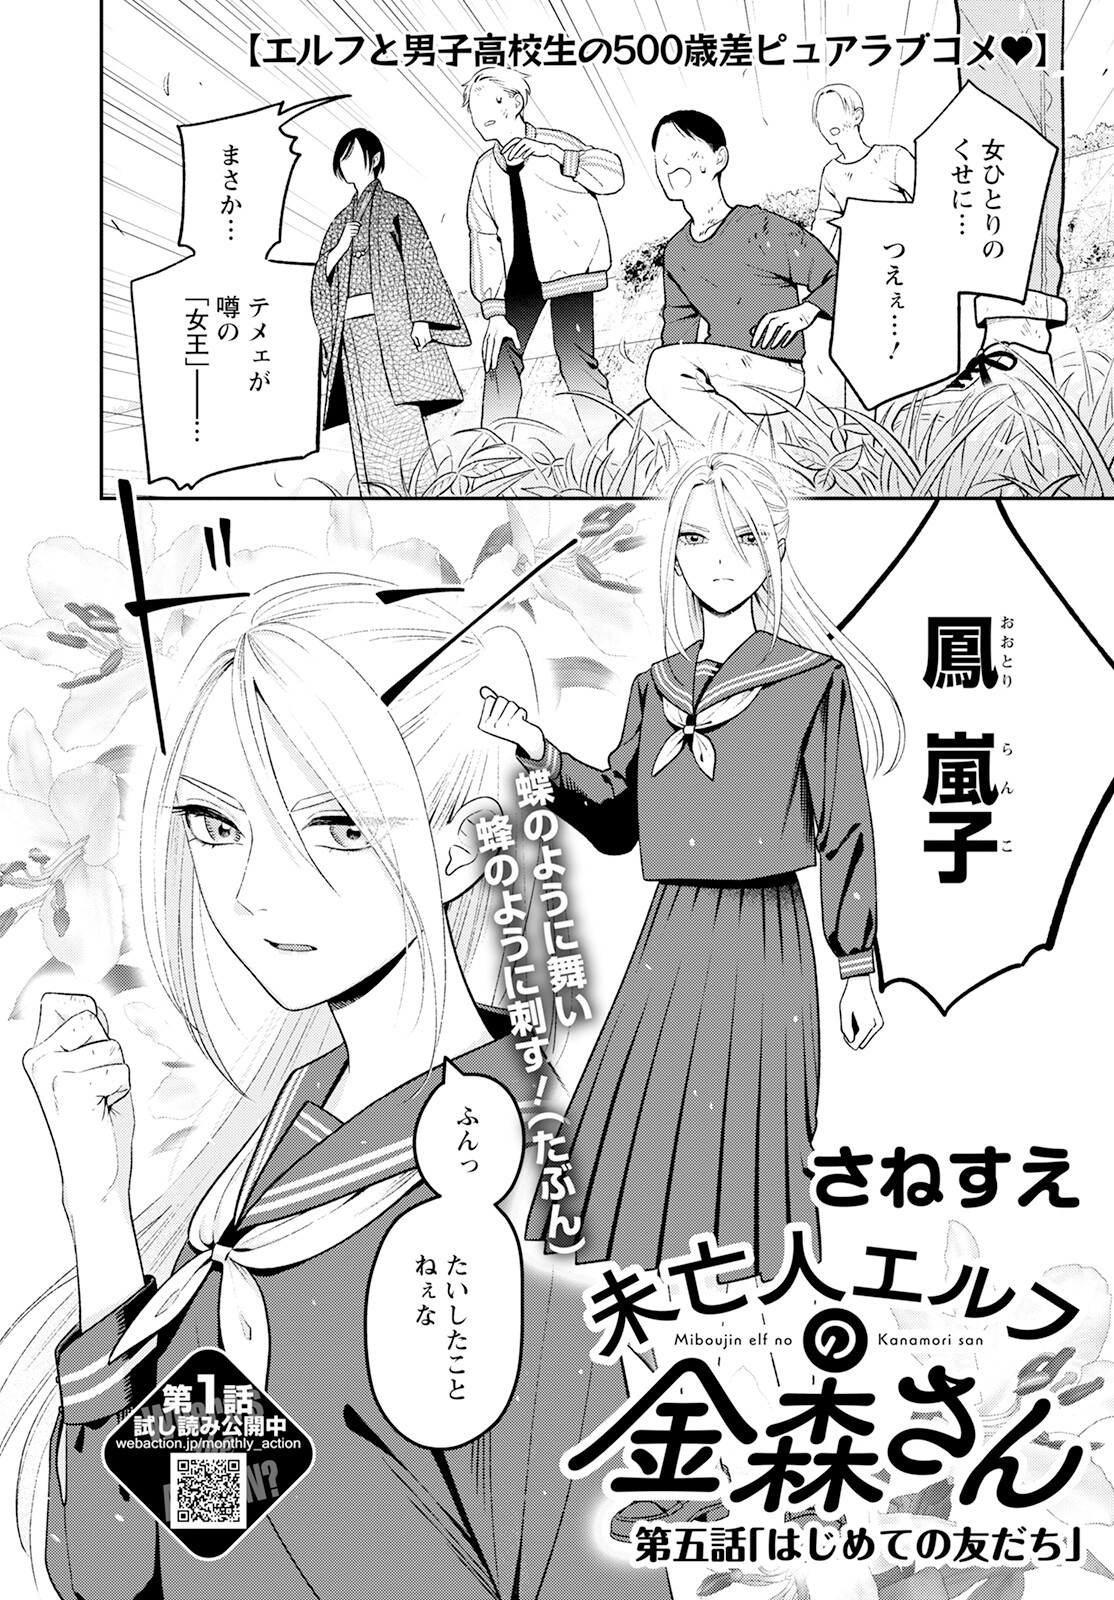 Miboujin Elf no Kanamori-san - Chapter 5 - Page 2